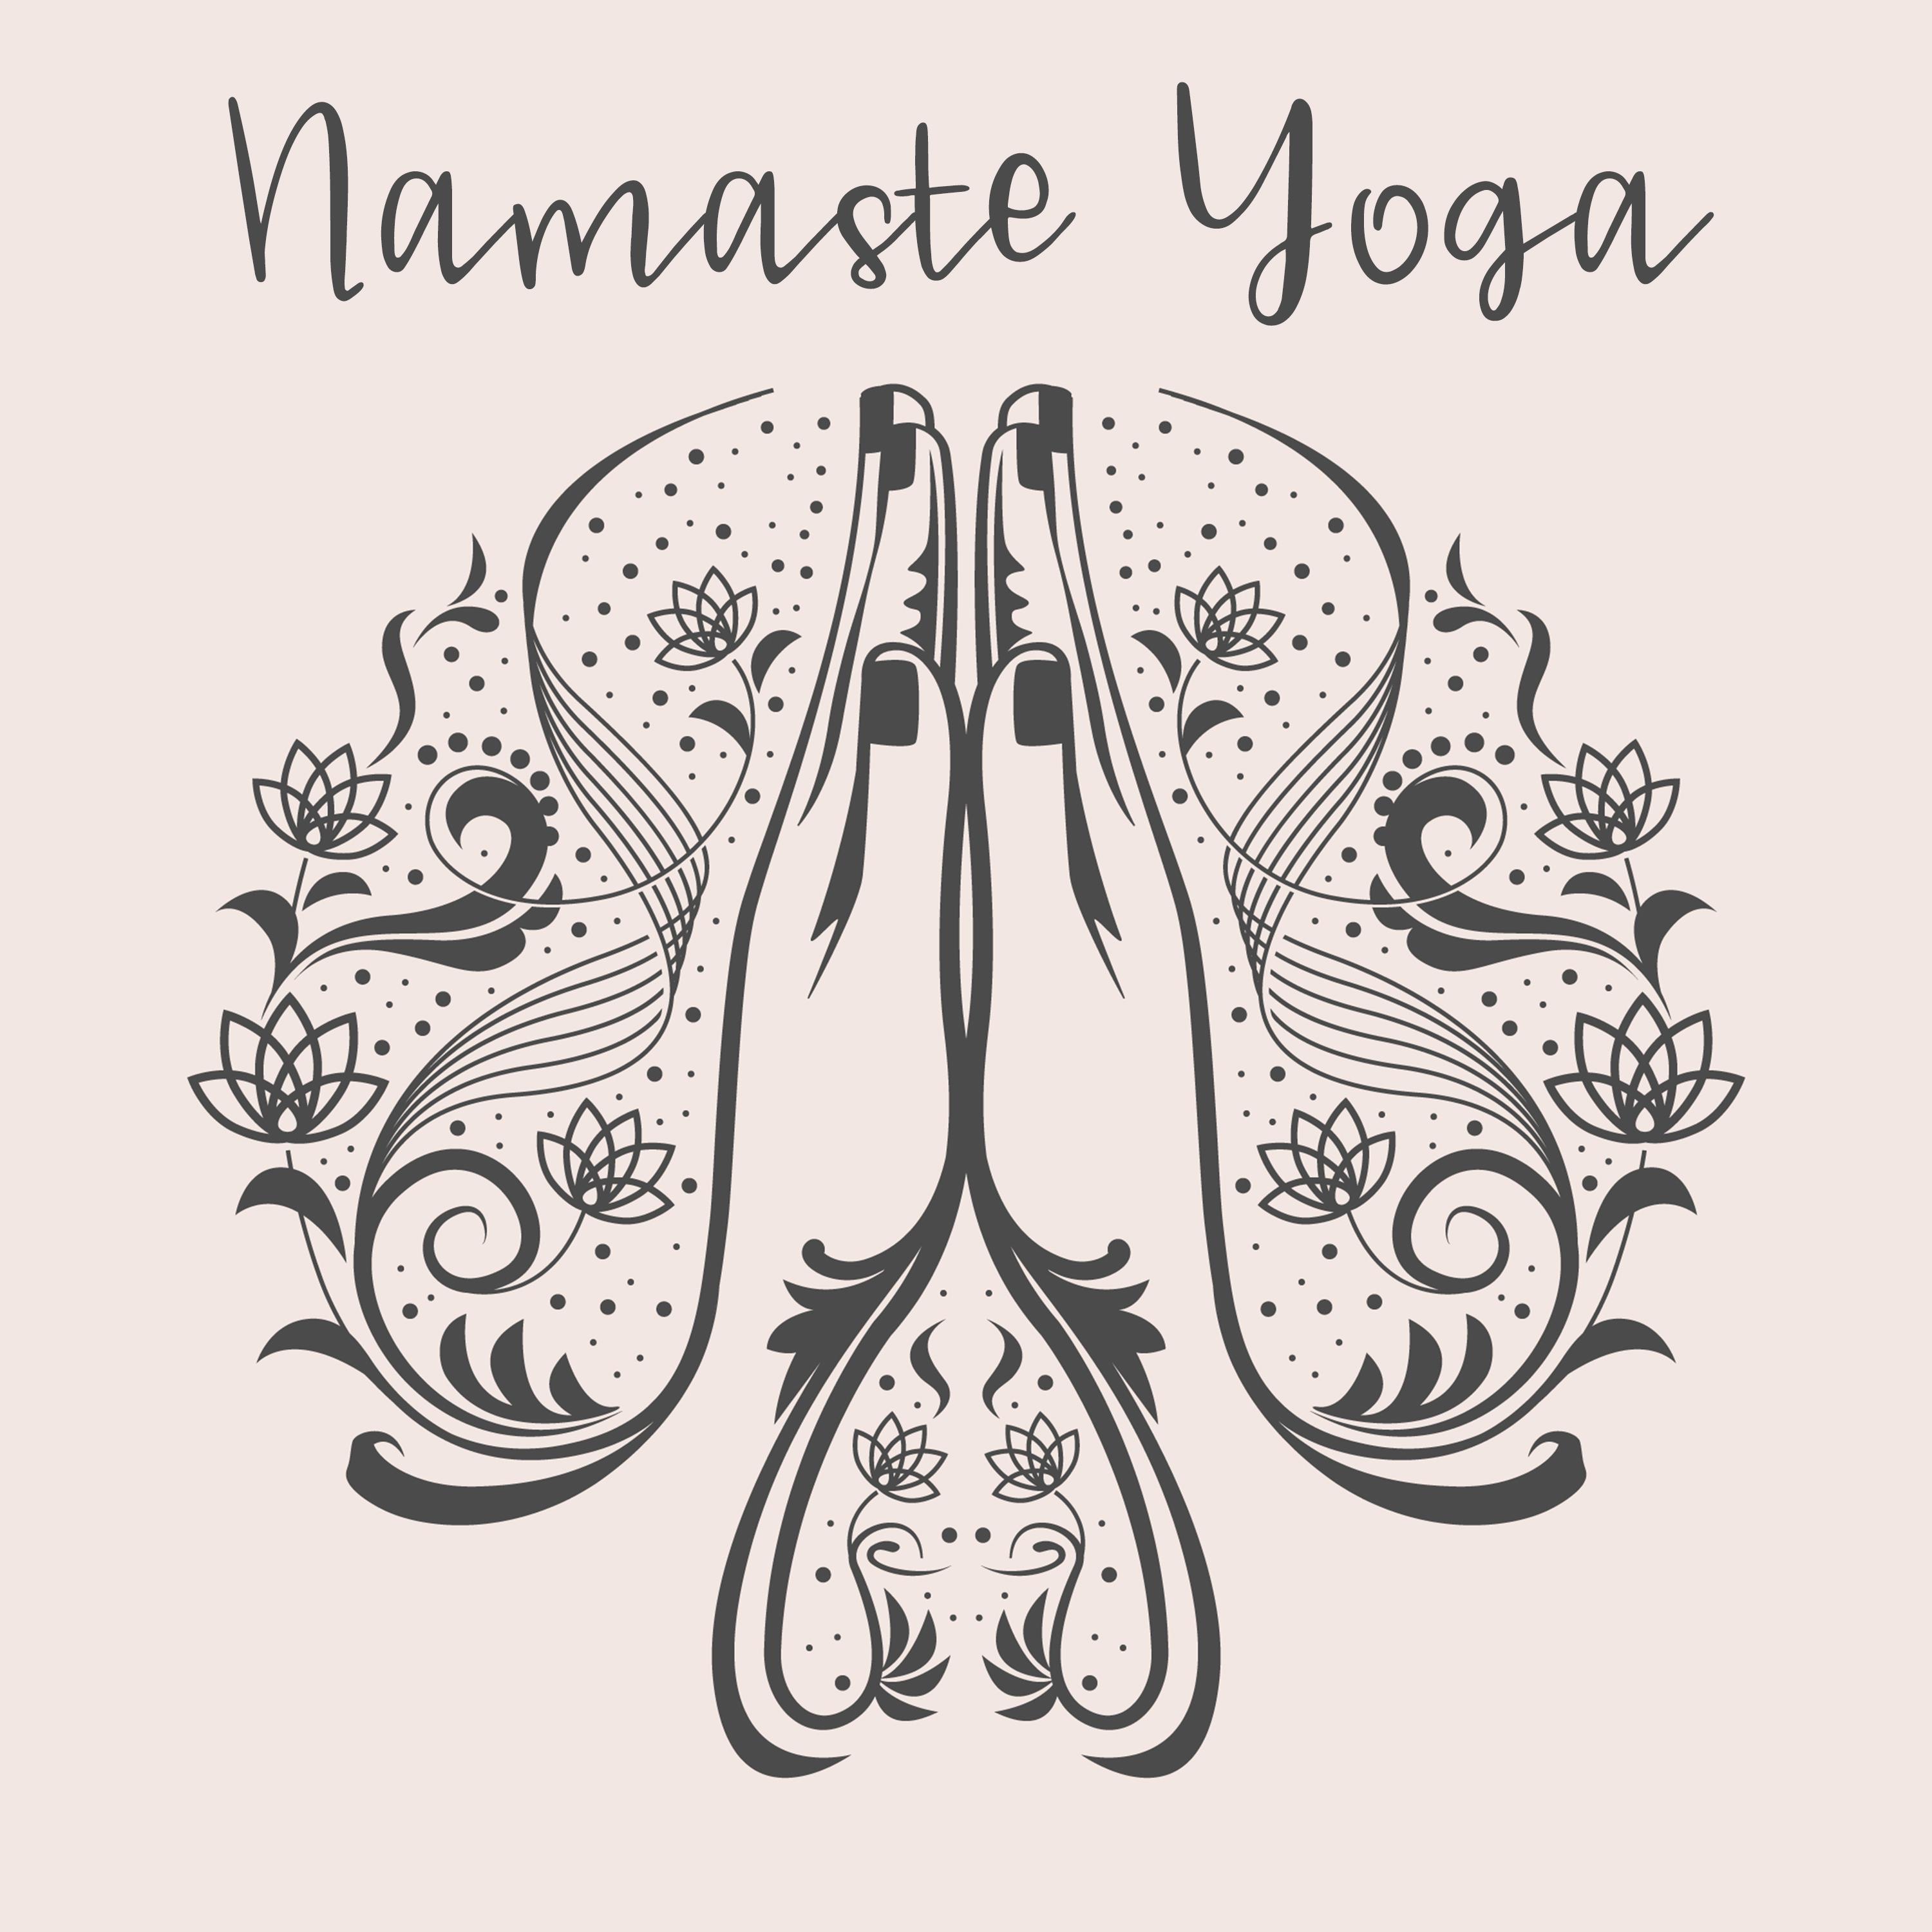 Namaste Yoga (Sun Salutation Position, Morning Yoga)